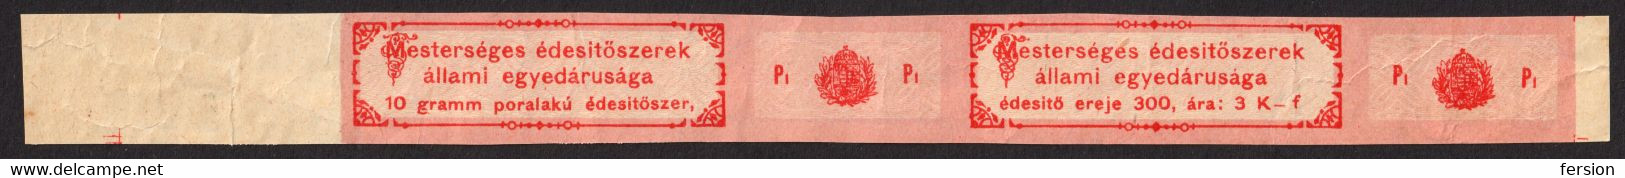 1912 Hungary - SUGAR Substitute Seal Tax Stamp Stripe P1 - 3.- K - Revenue Tax SEAL - MBIK Cat. No. 1. - Fiscales